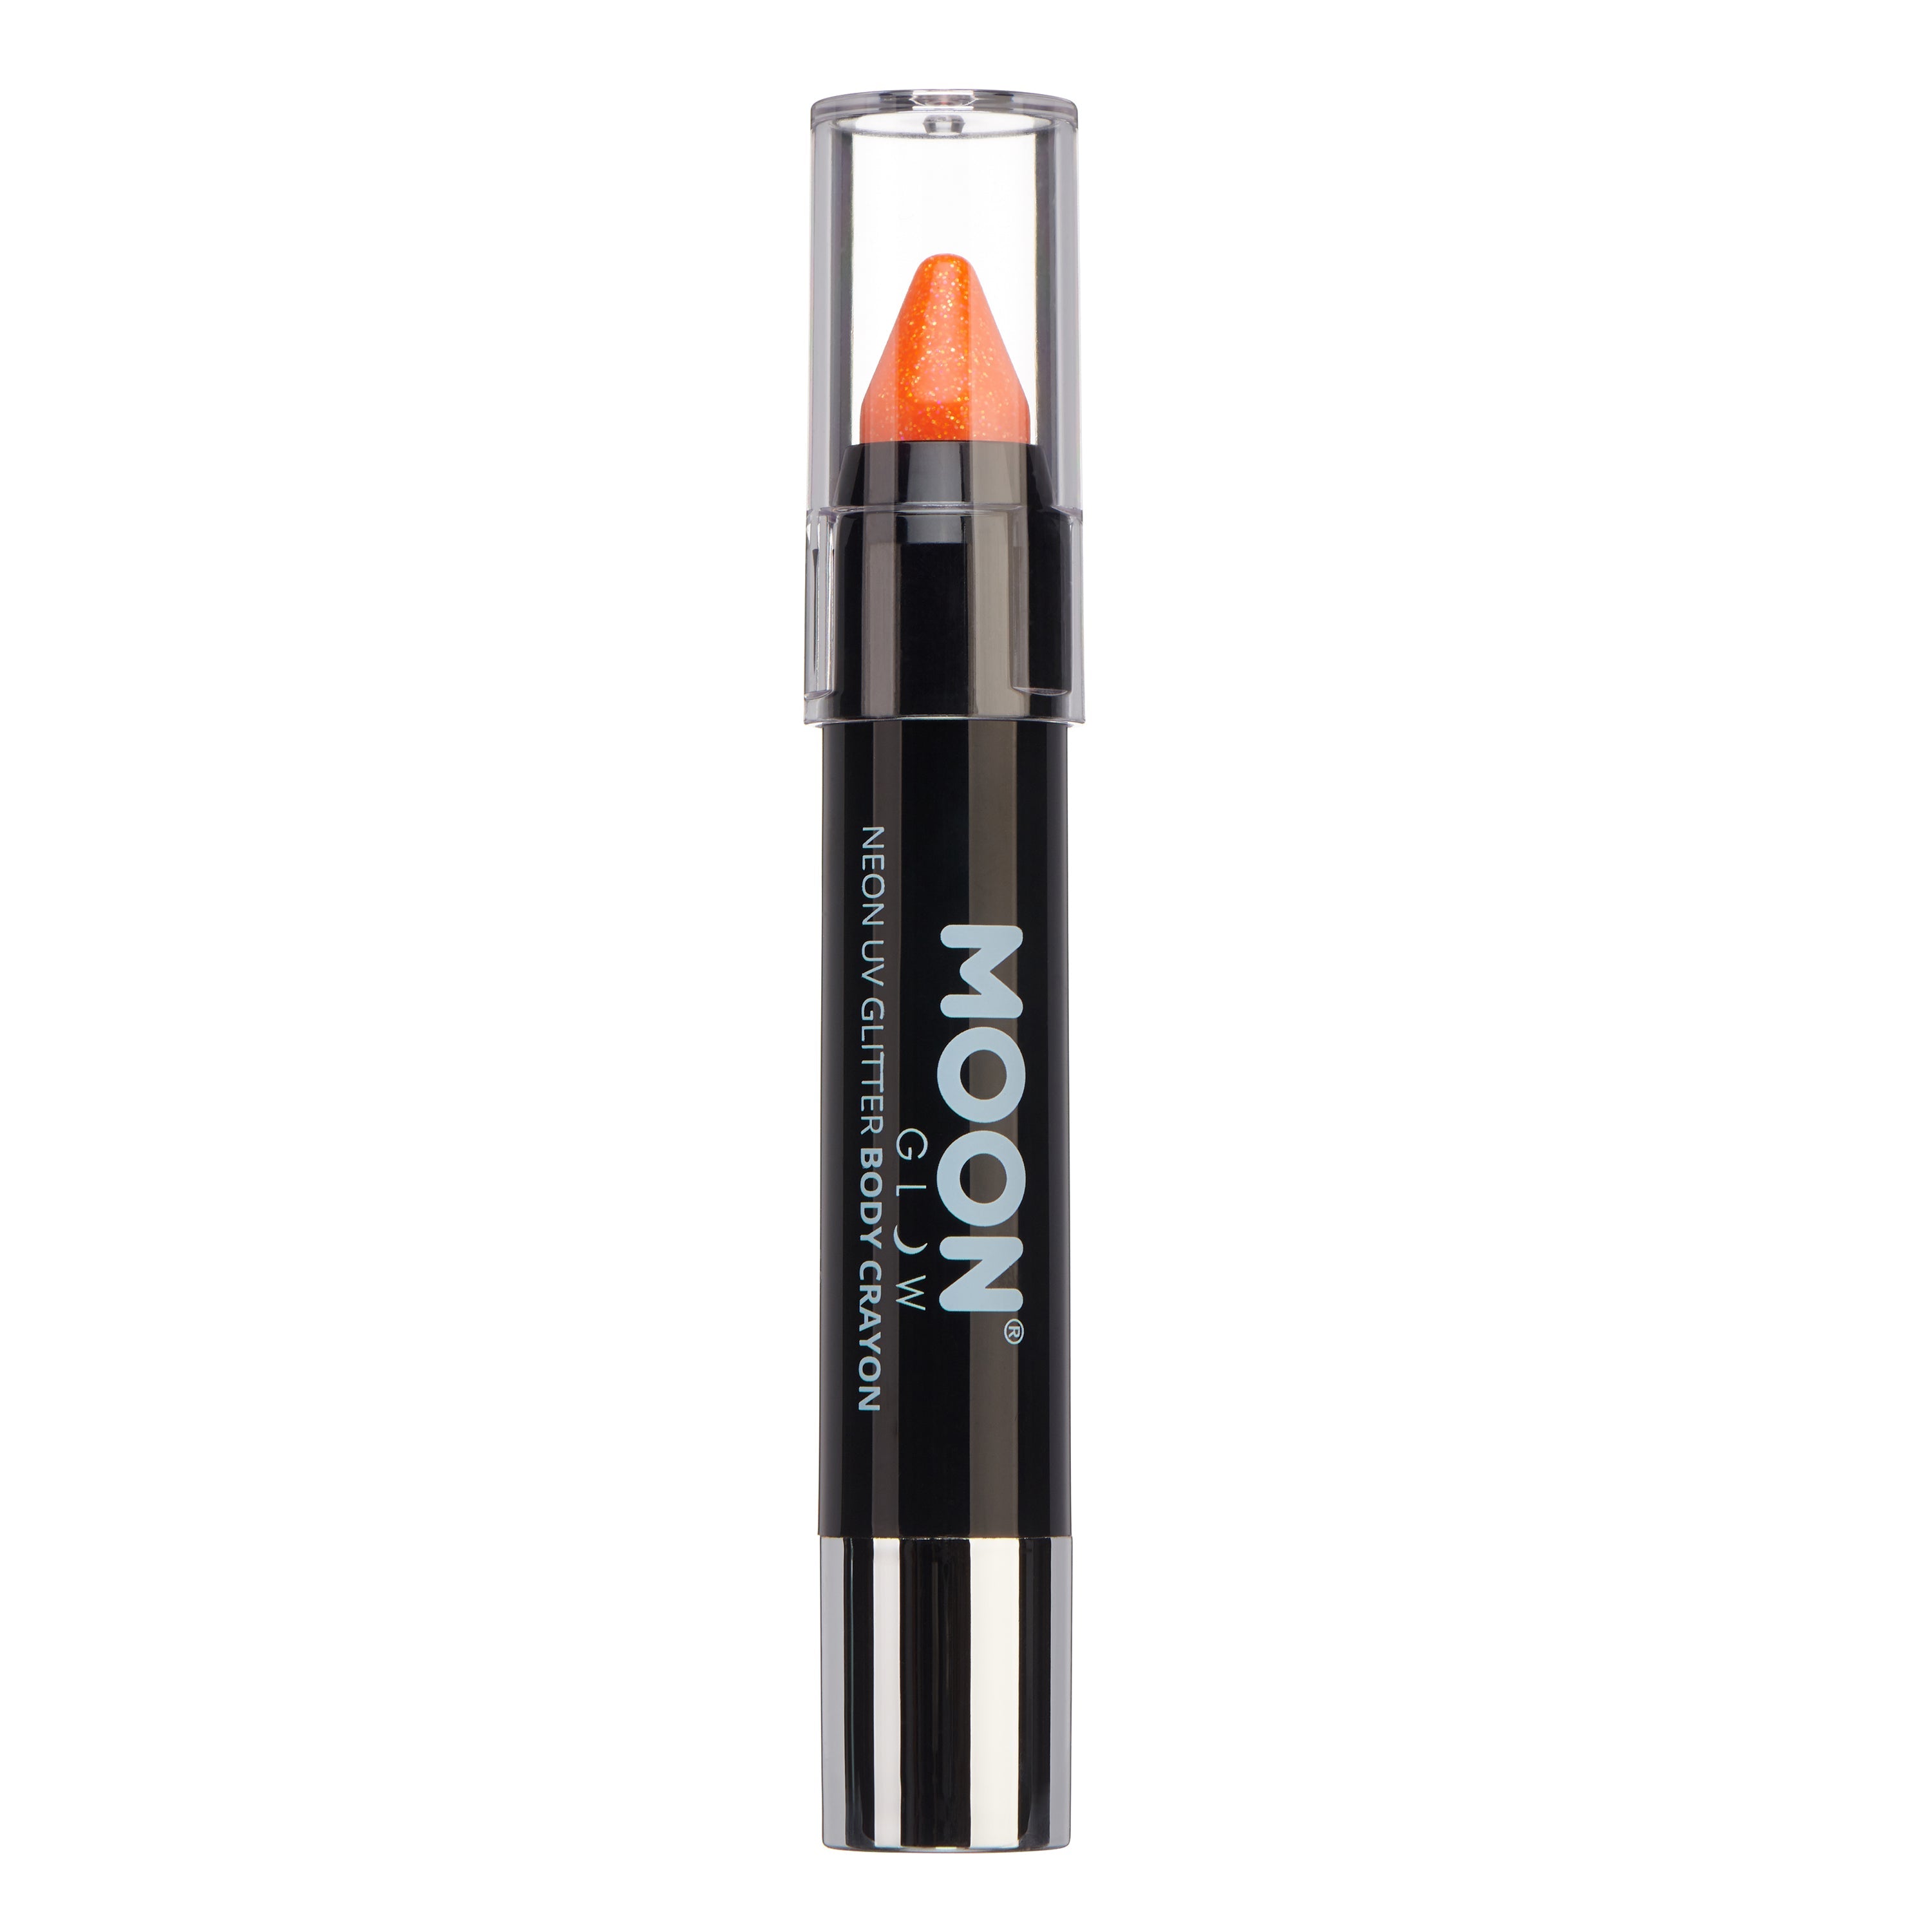 Orange - Neon UV Glow Blacklight Glitter Face & Body Crayon, 3.5g. Cosmetically certified, FDA & Health Canada compliant and cruelty free.